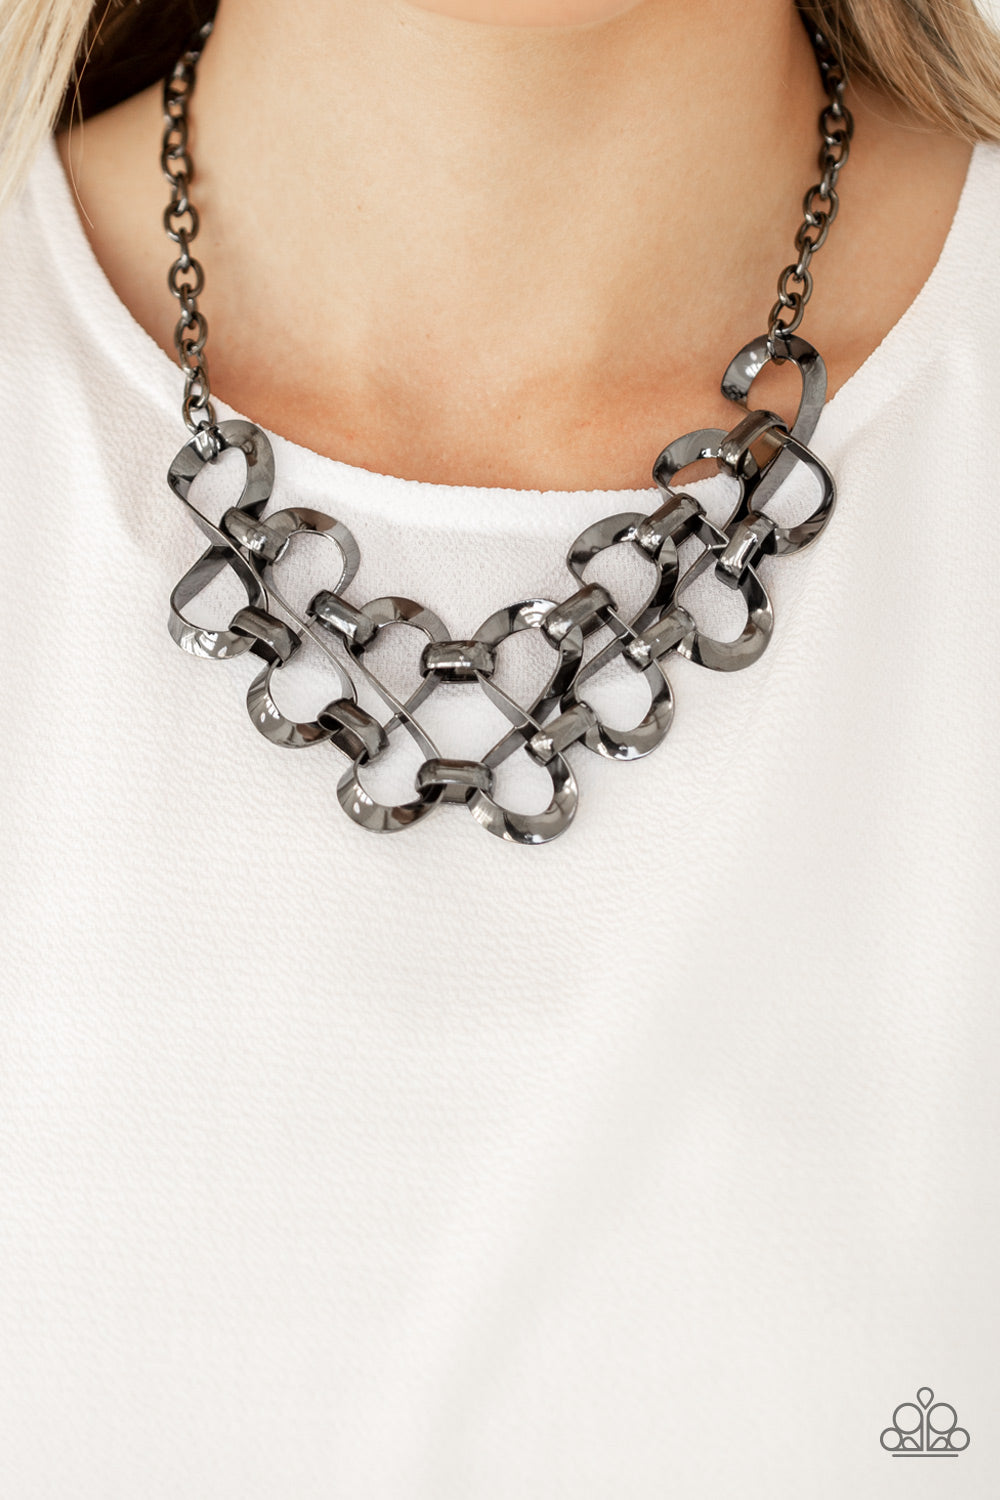 Catwalk Queen - Black/Gunmetal Necklace - Paparazzi Accessories – Bedazzle  Me Pretty Mobile Fashion Boutique